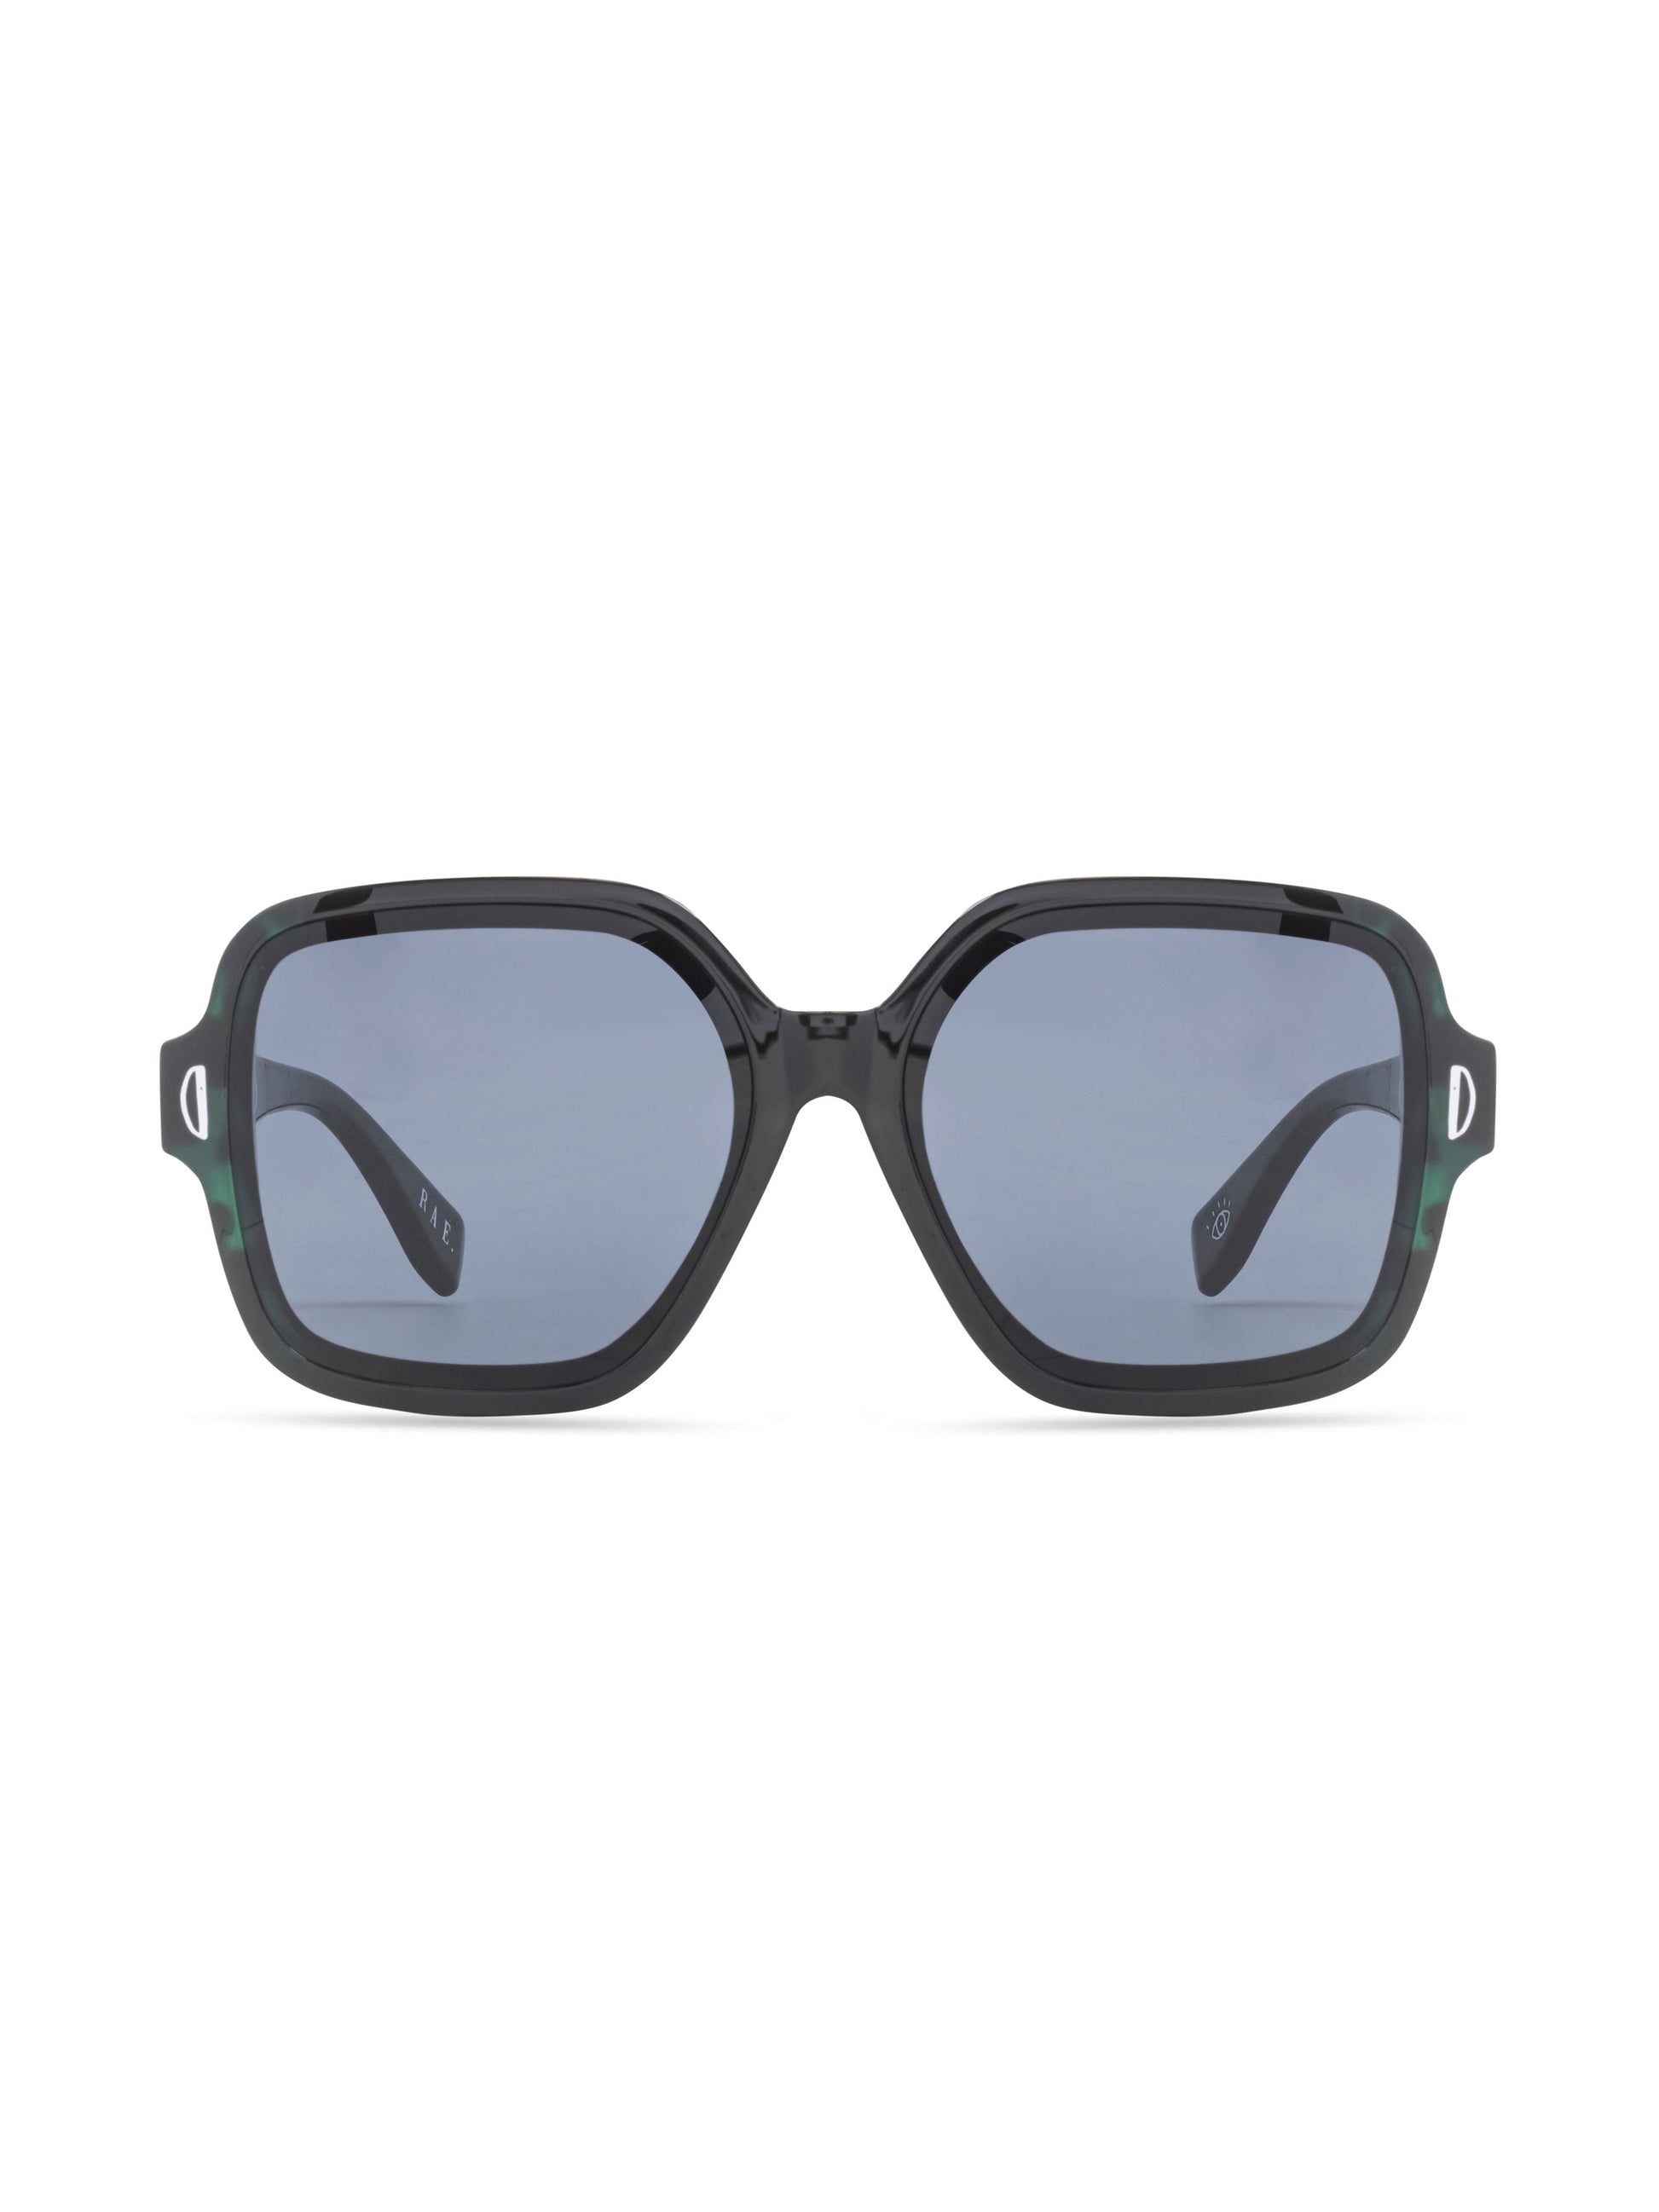 WANDA Premium Sunglasses with "SUN KISSED" Signature Font - Rae Dunn Wear